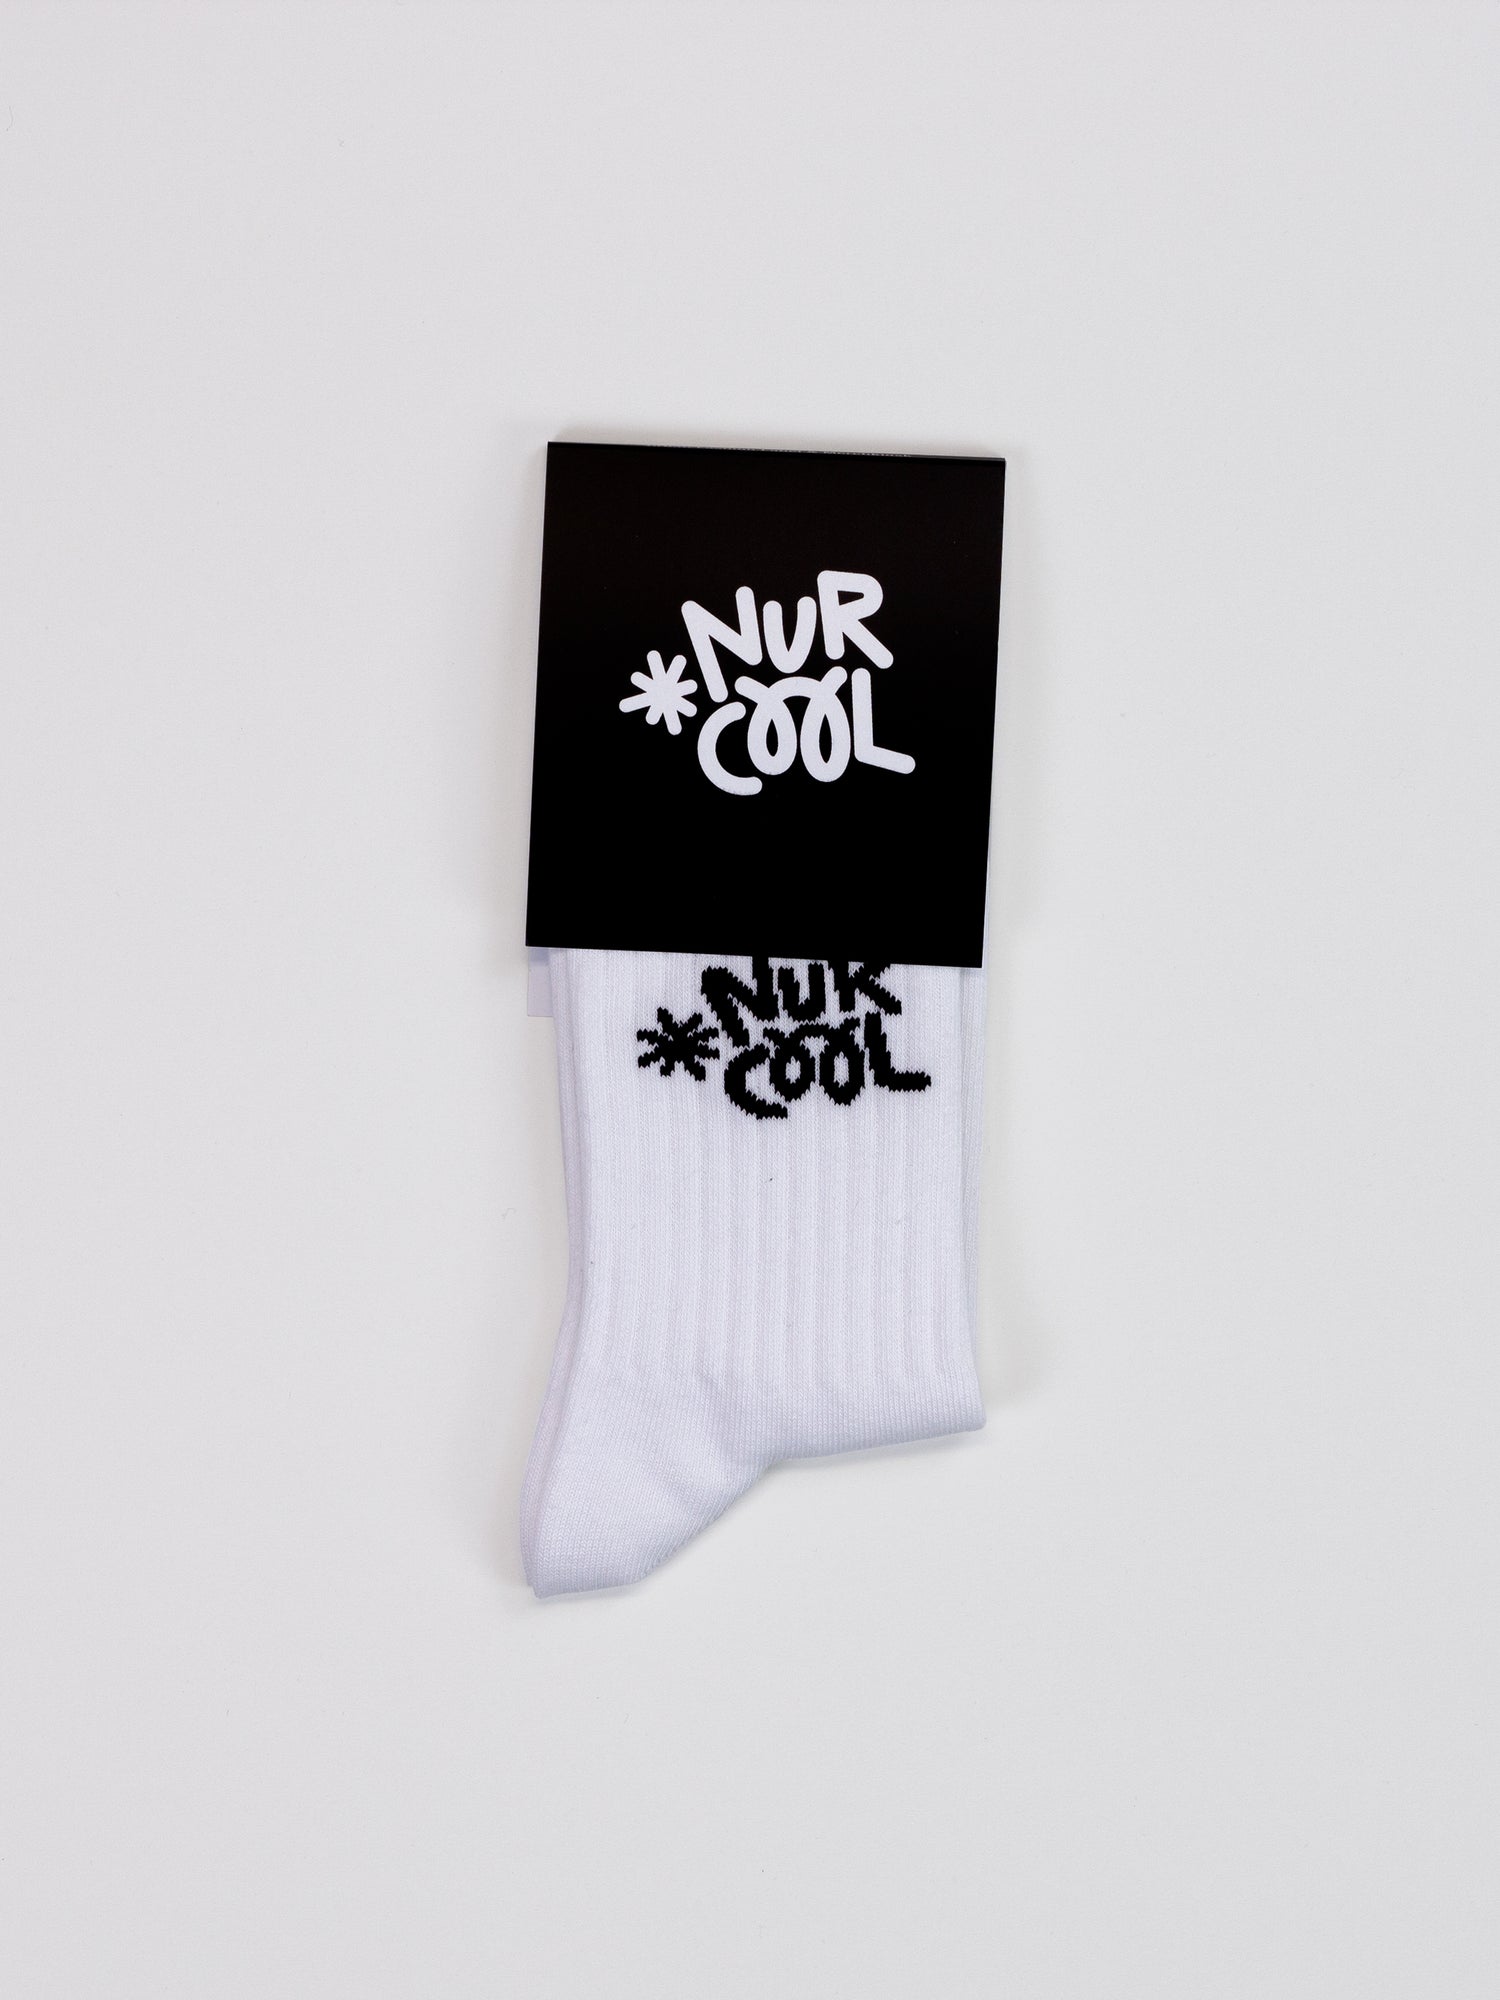 Socken: nurcool - nurcool